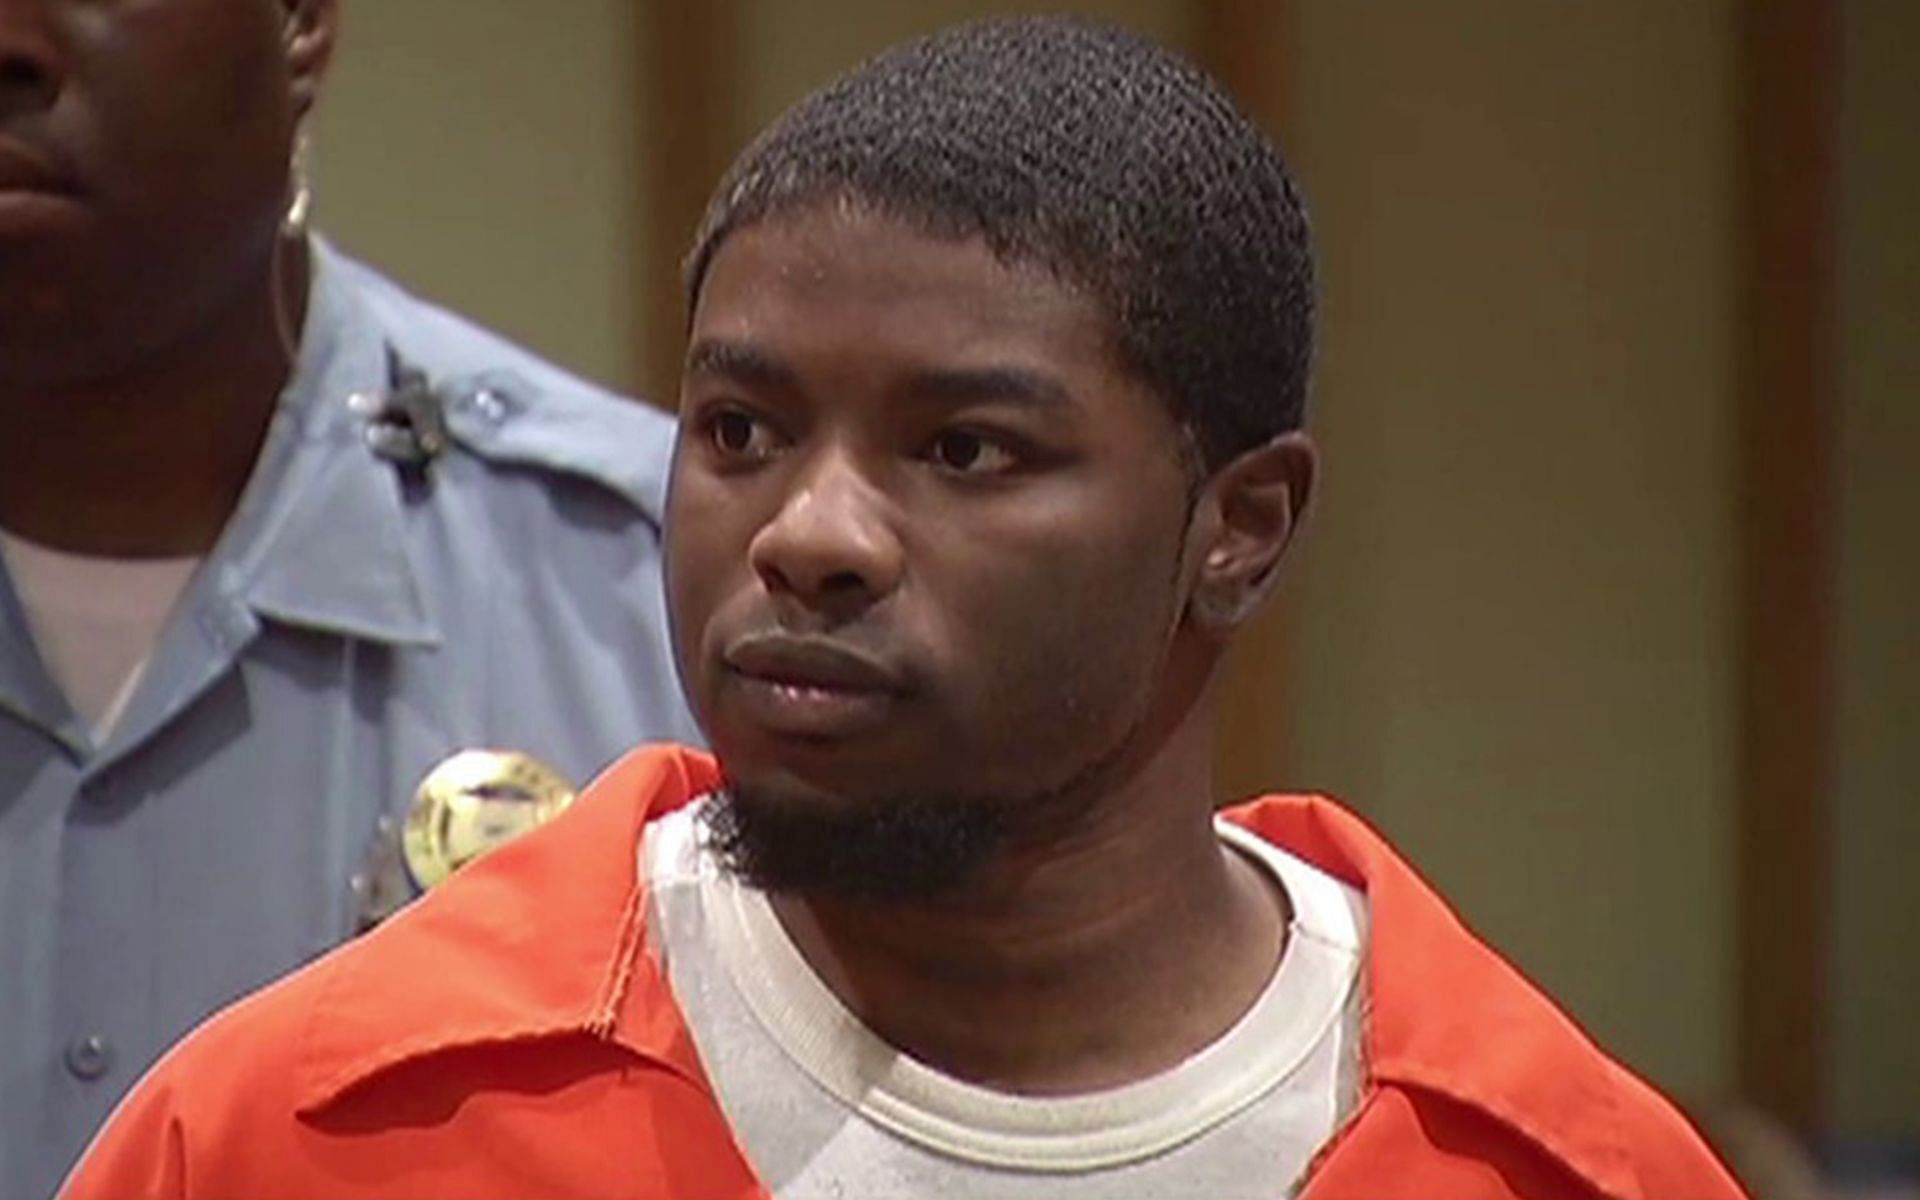 A still of Alyssiah Wiley&#039;s convicted killer boyfriend Jermaine Richards (Image via Fox)